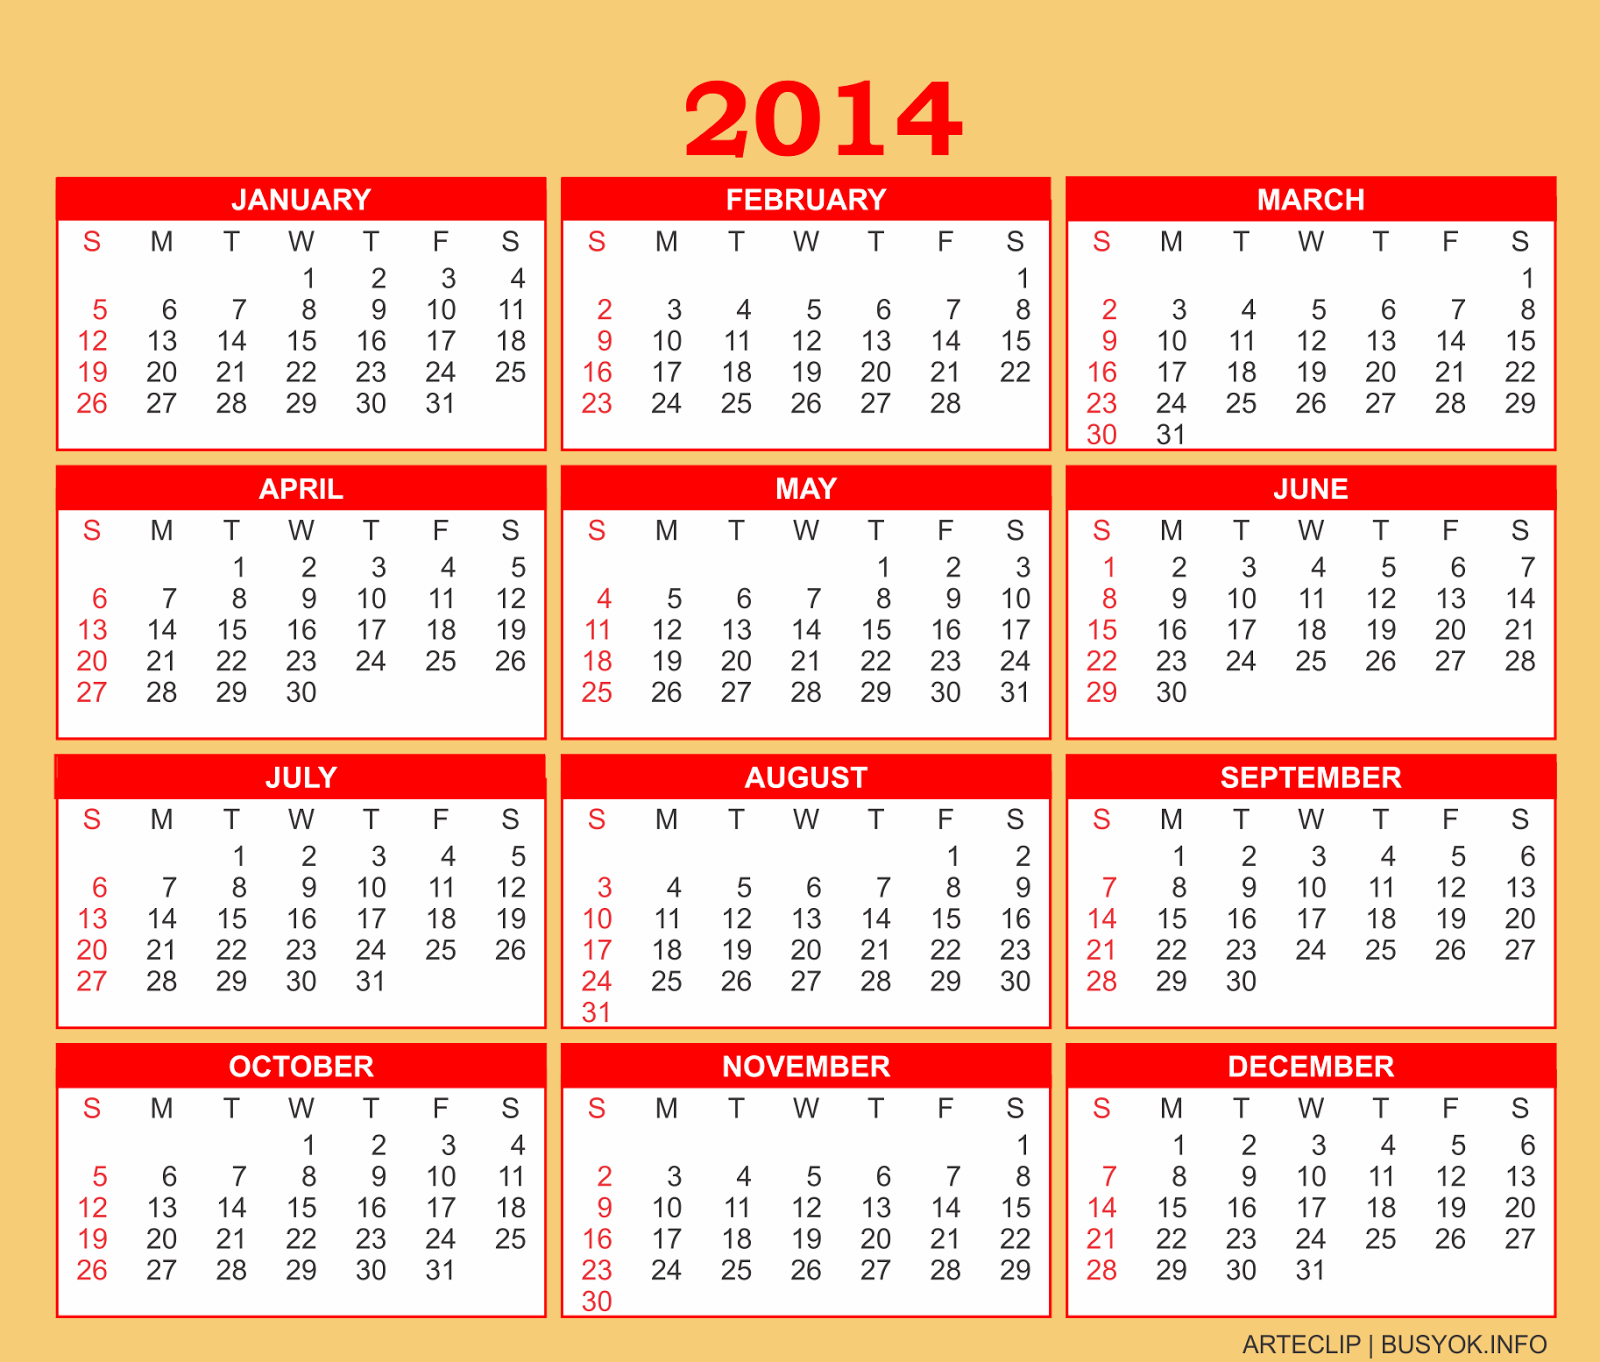 2014 calendar download pdf